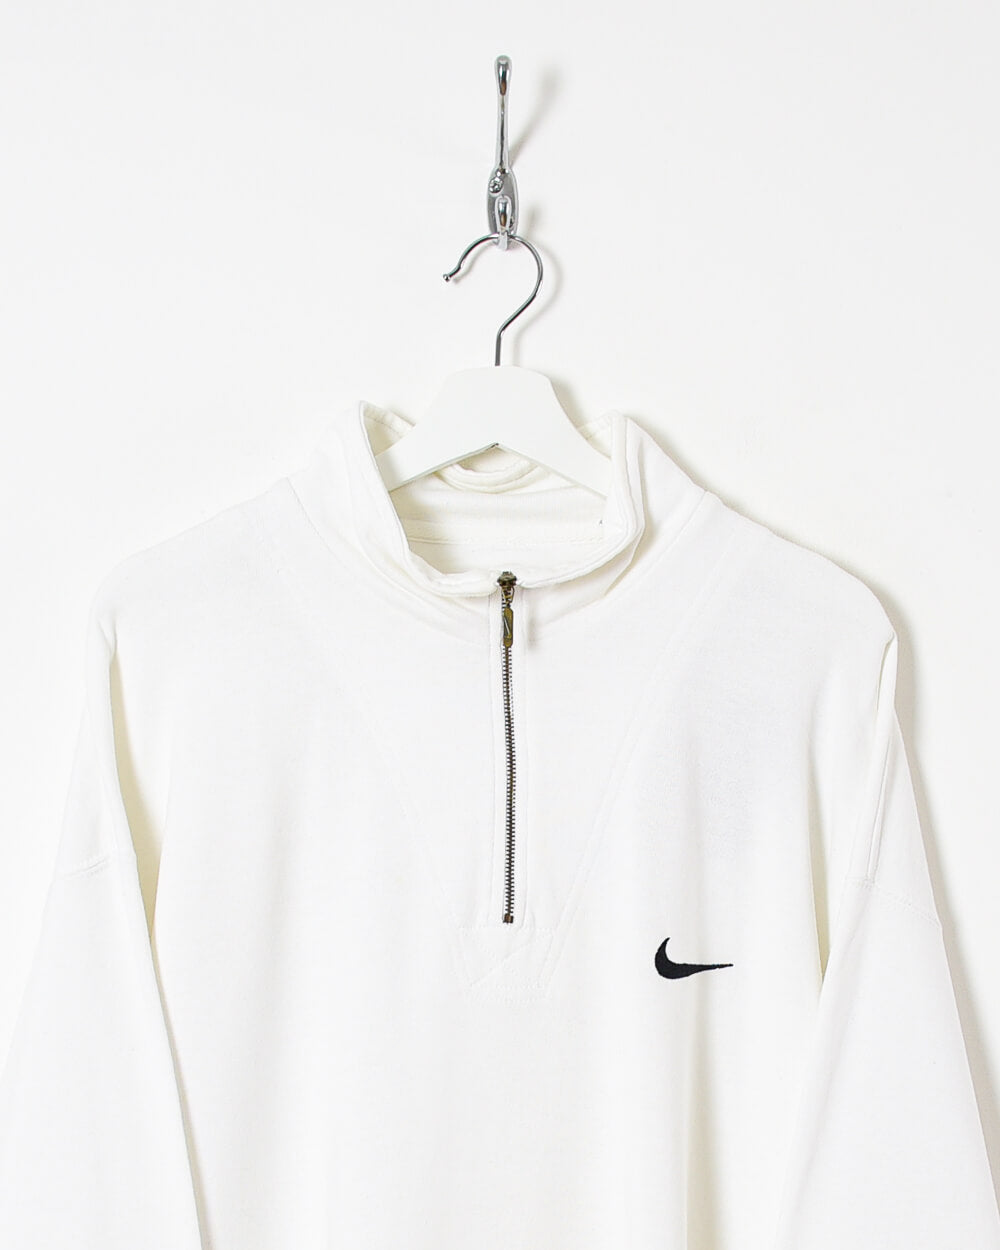 Nike 1/4 Zip Sweatshirt - XX-Large - Domno Vintage 90s, 80s, 00s Retro and Vintage Clothing 